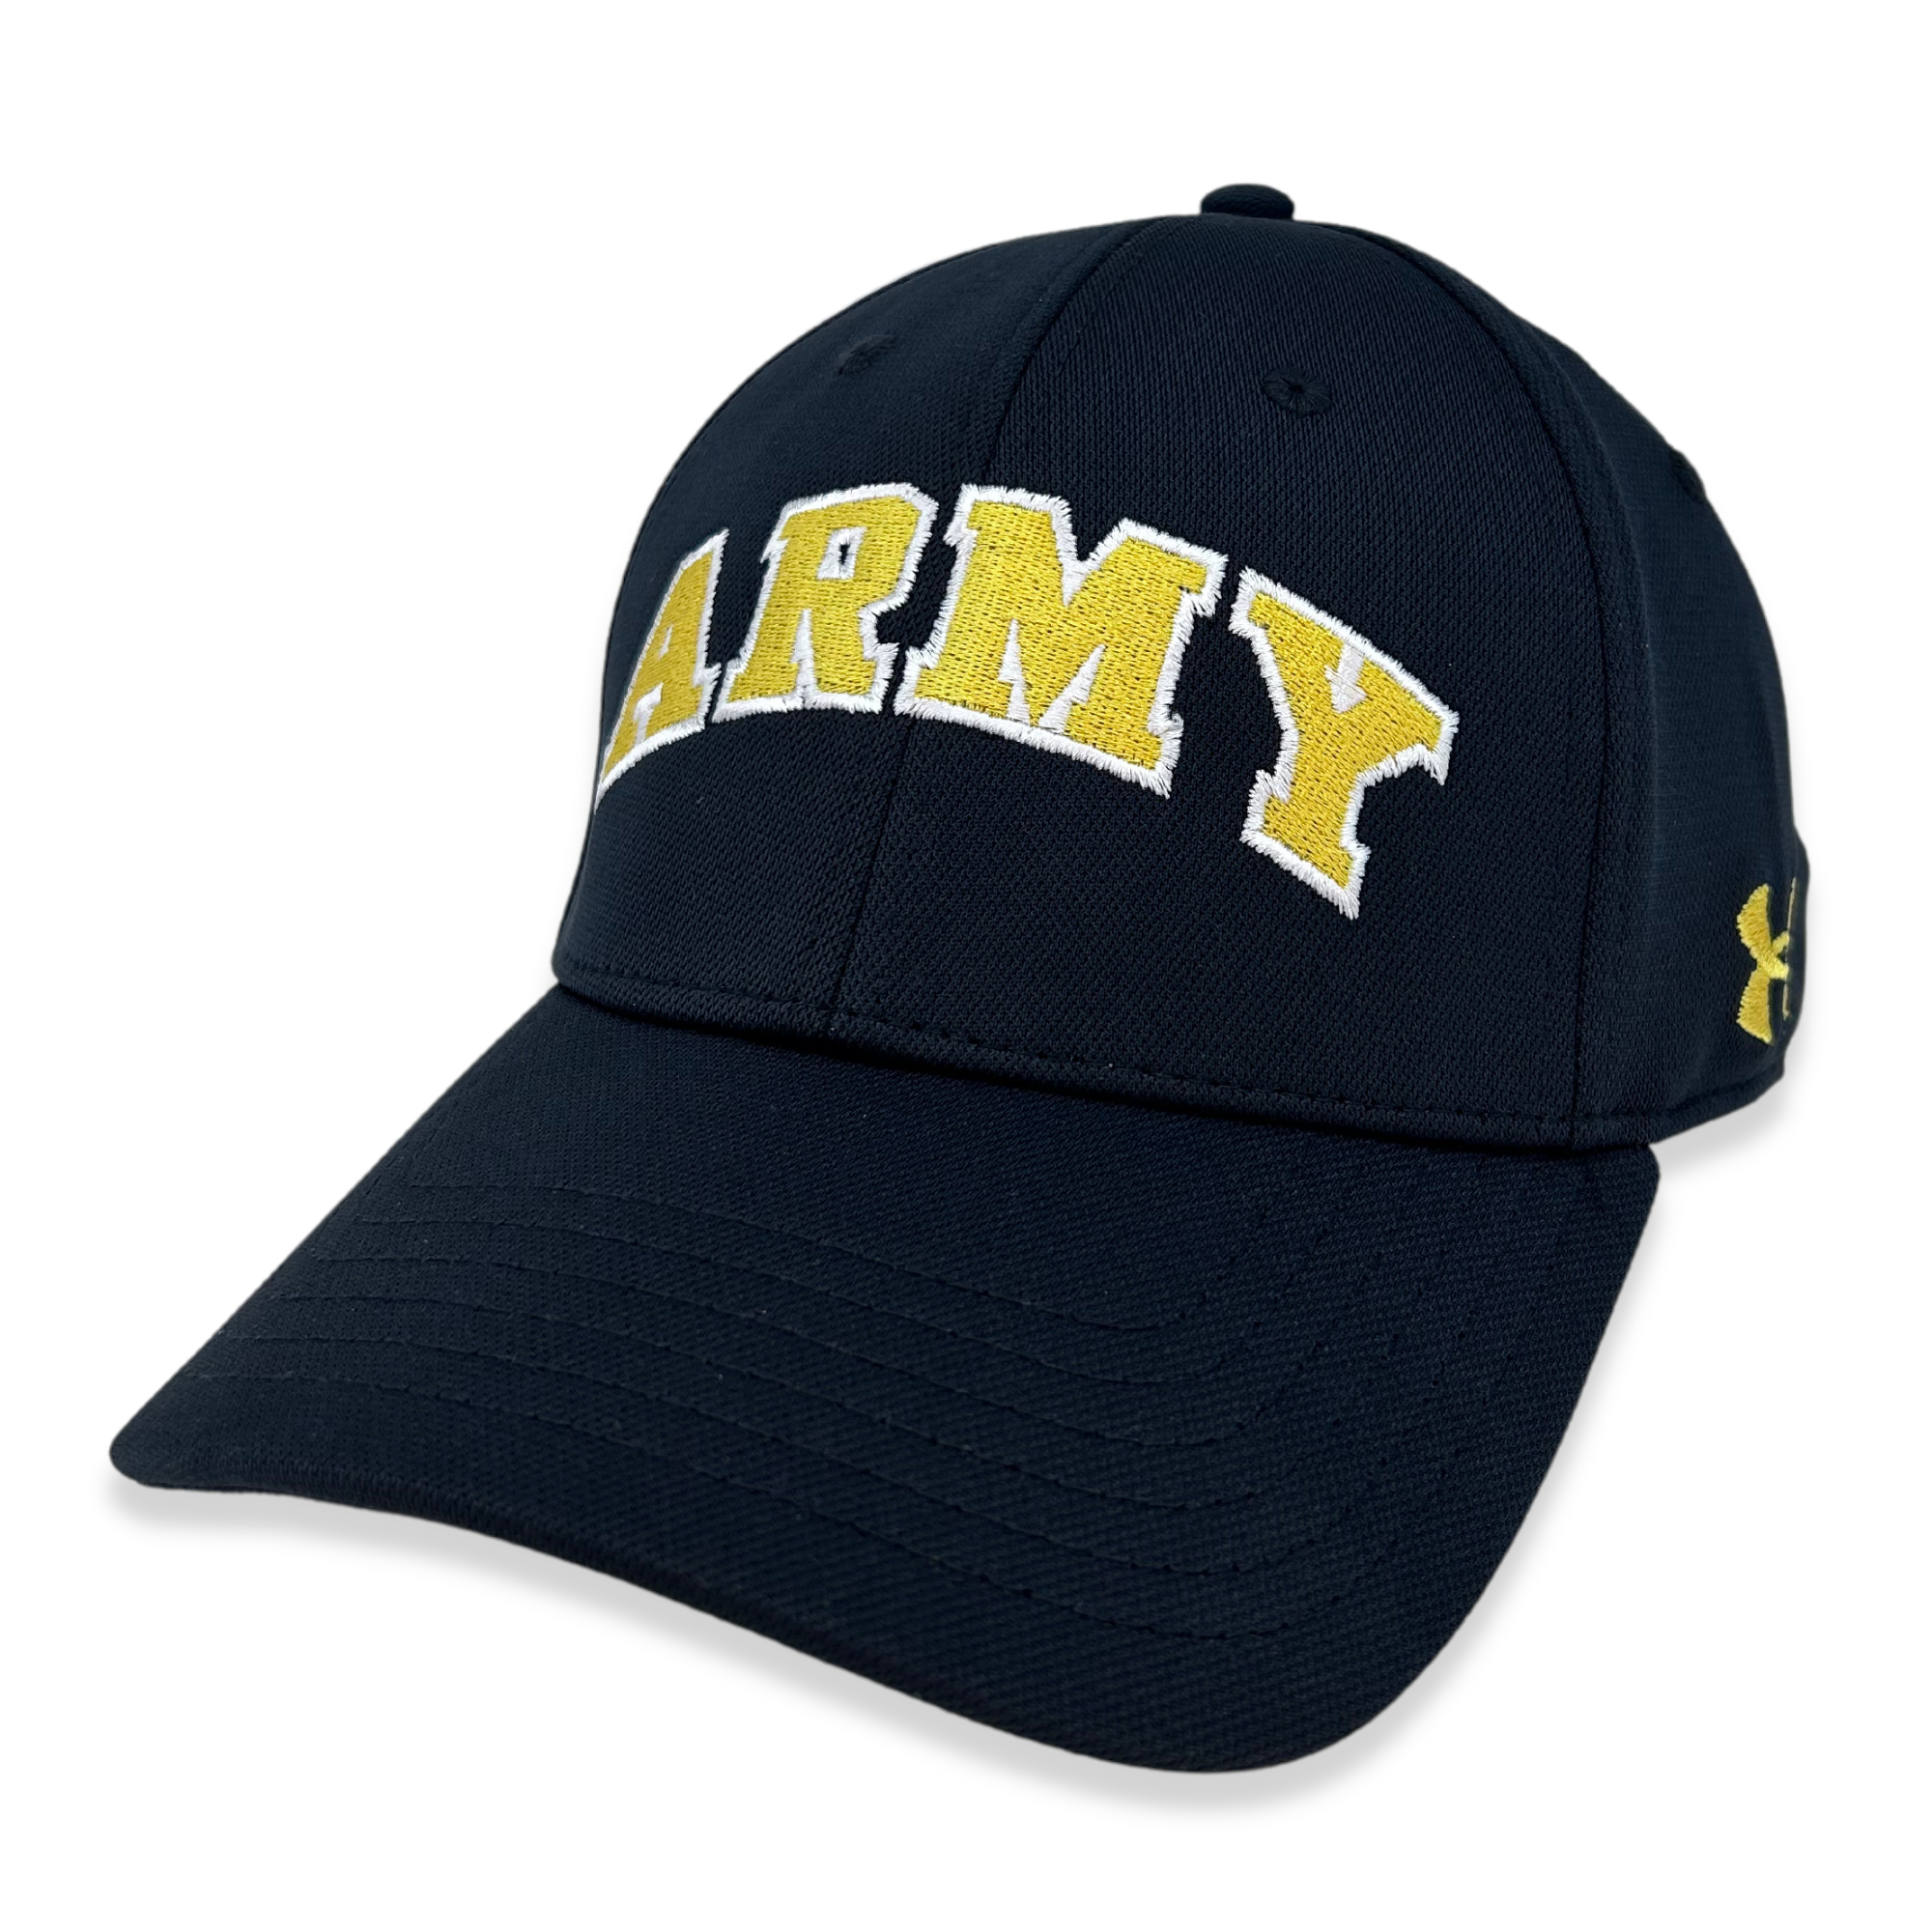 Army Under Armour Fit Hat Flex Blitzing (Black)